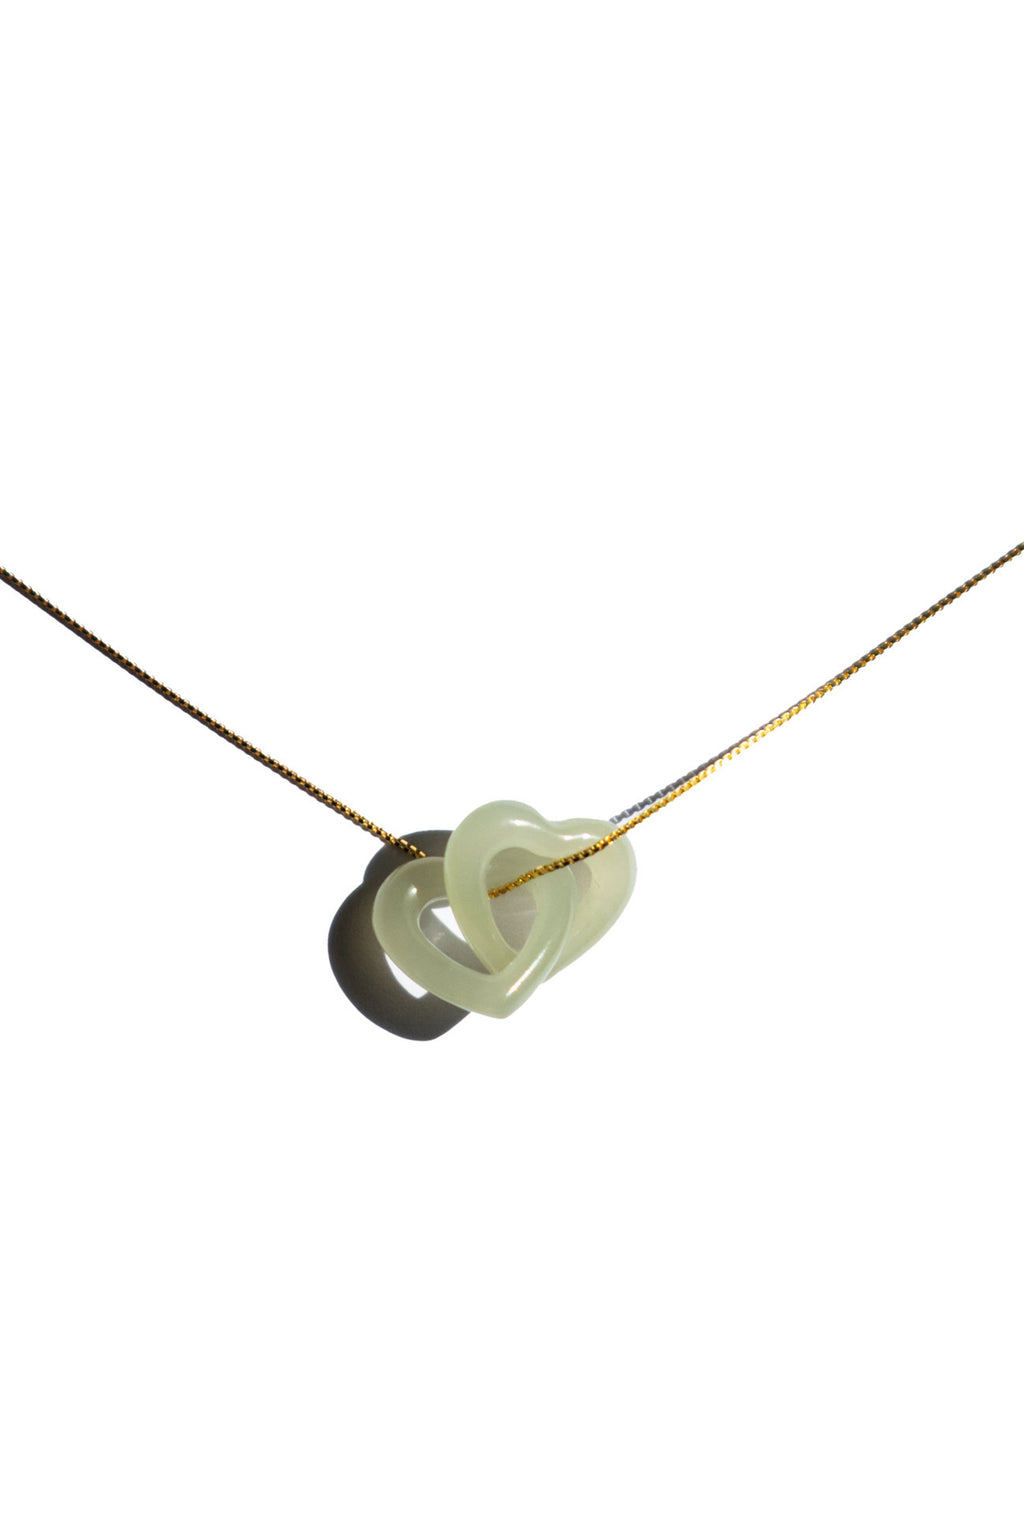 seree-linked-heart-necklace-nephrite-jade-1